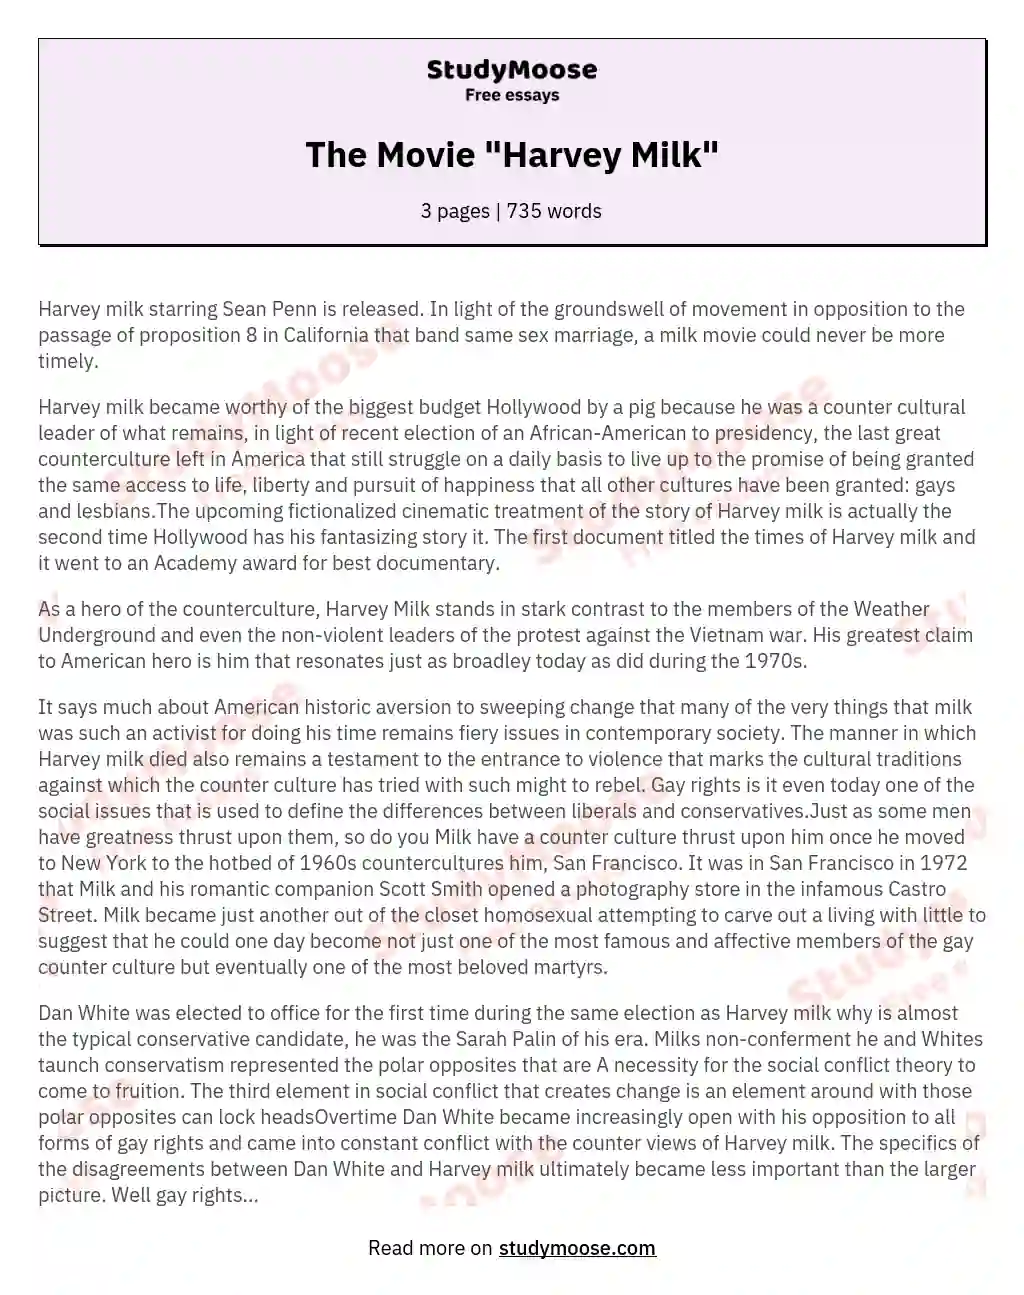 The Movie "Harvey Milk" essay